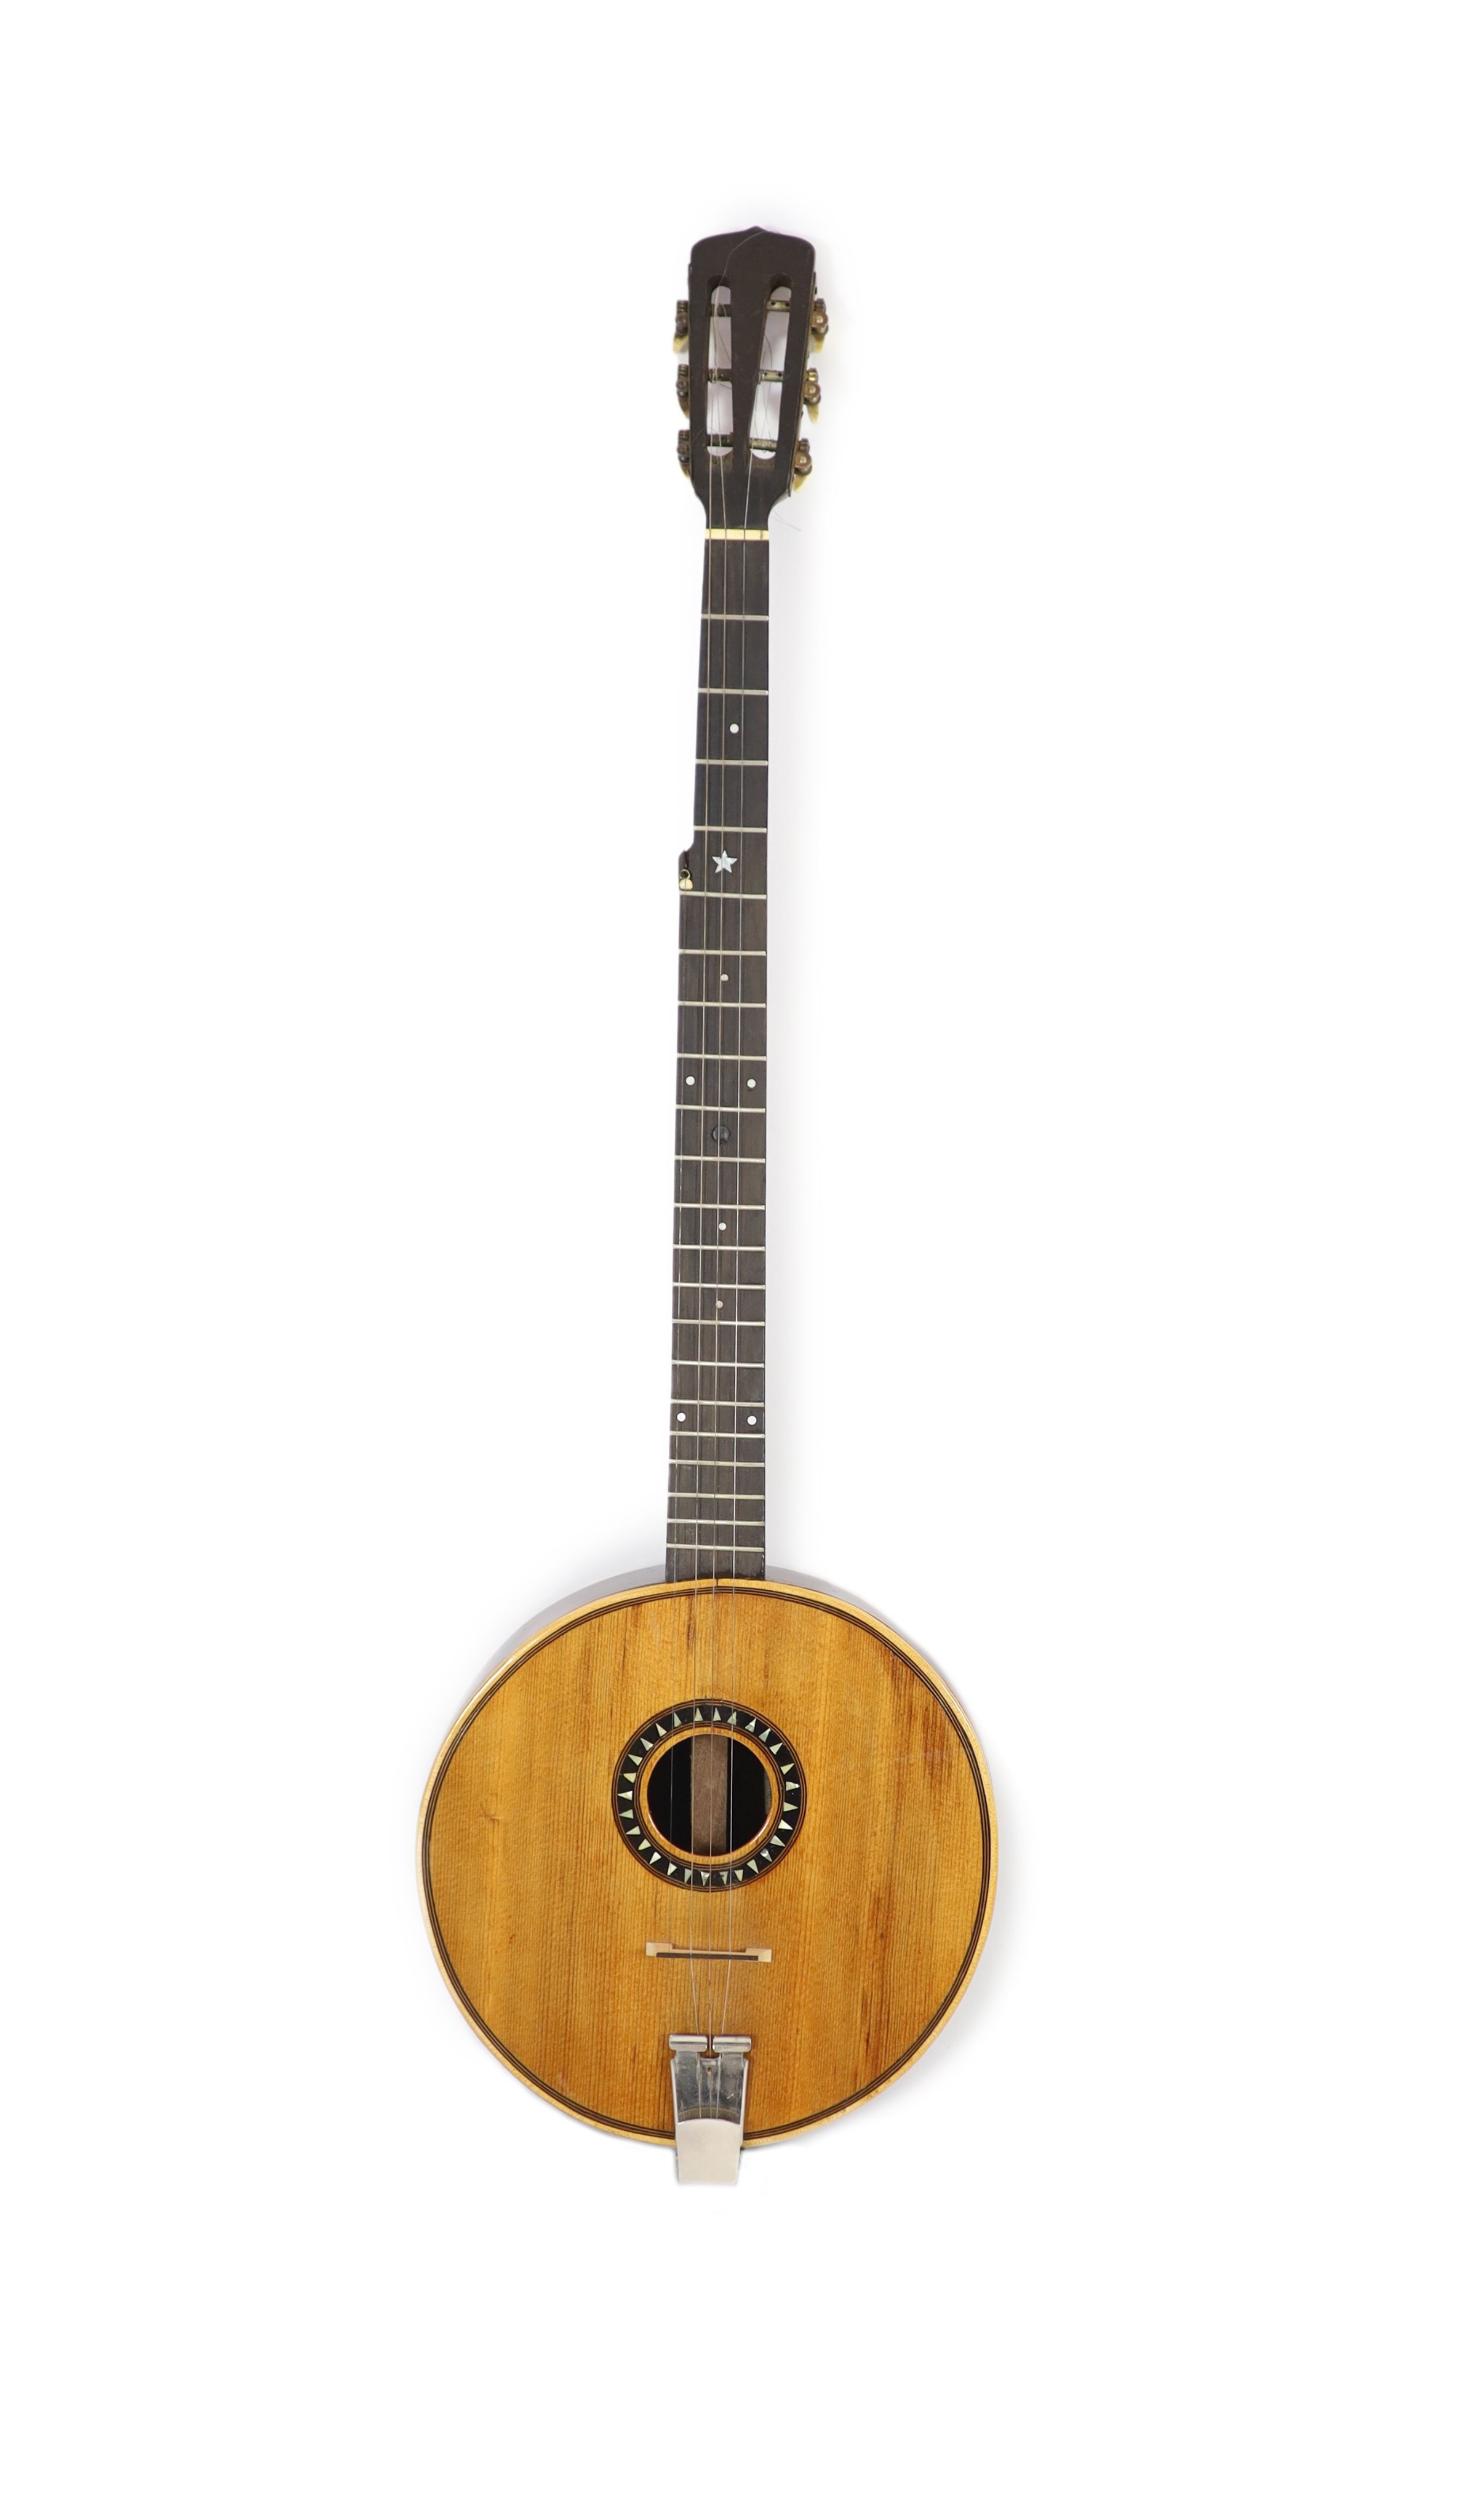 A wooden banjo length 95cm